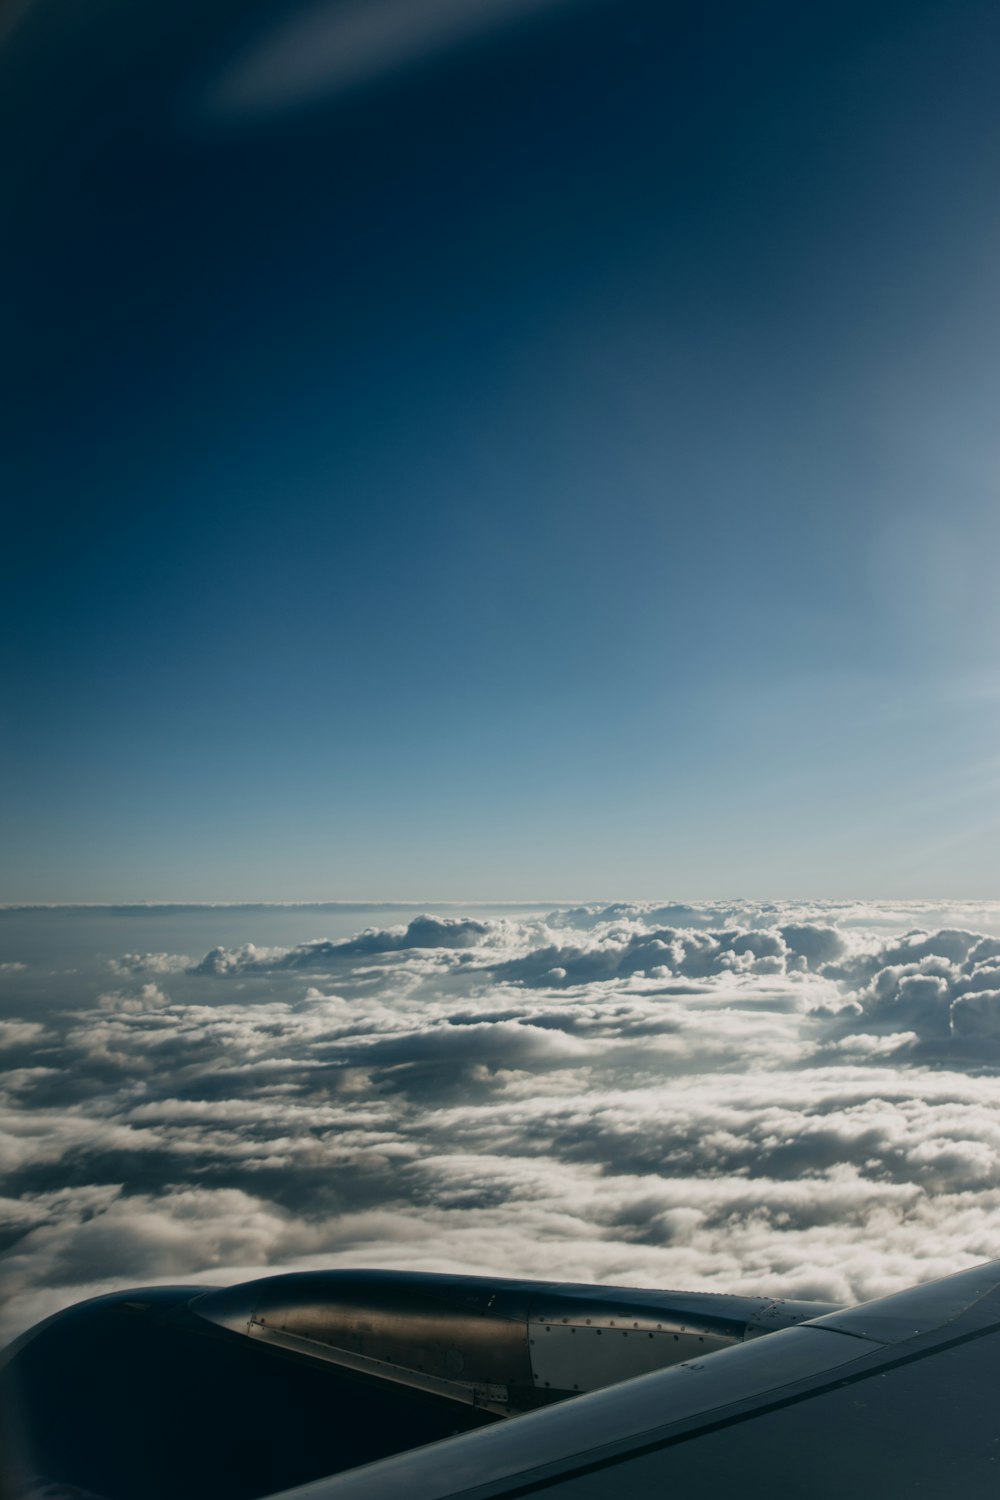 grey jetliner on flight over white clouds under clear blue sky